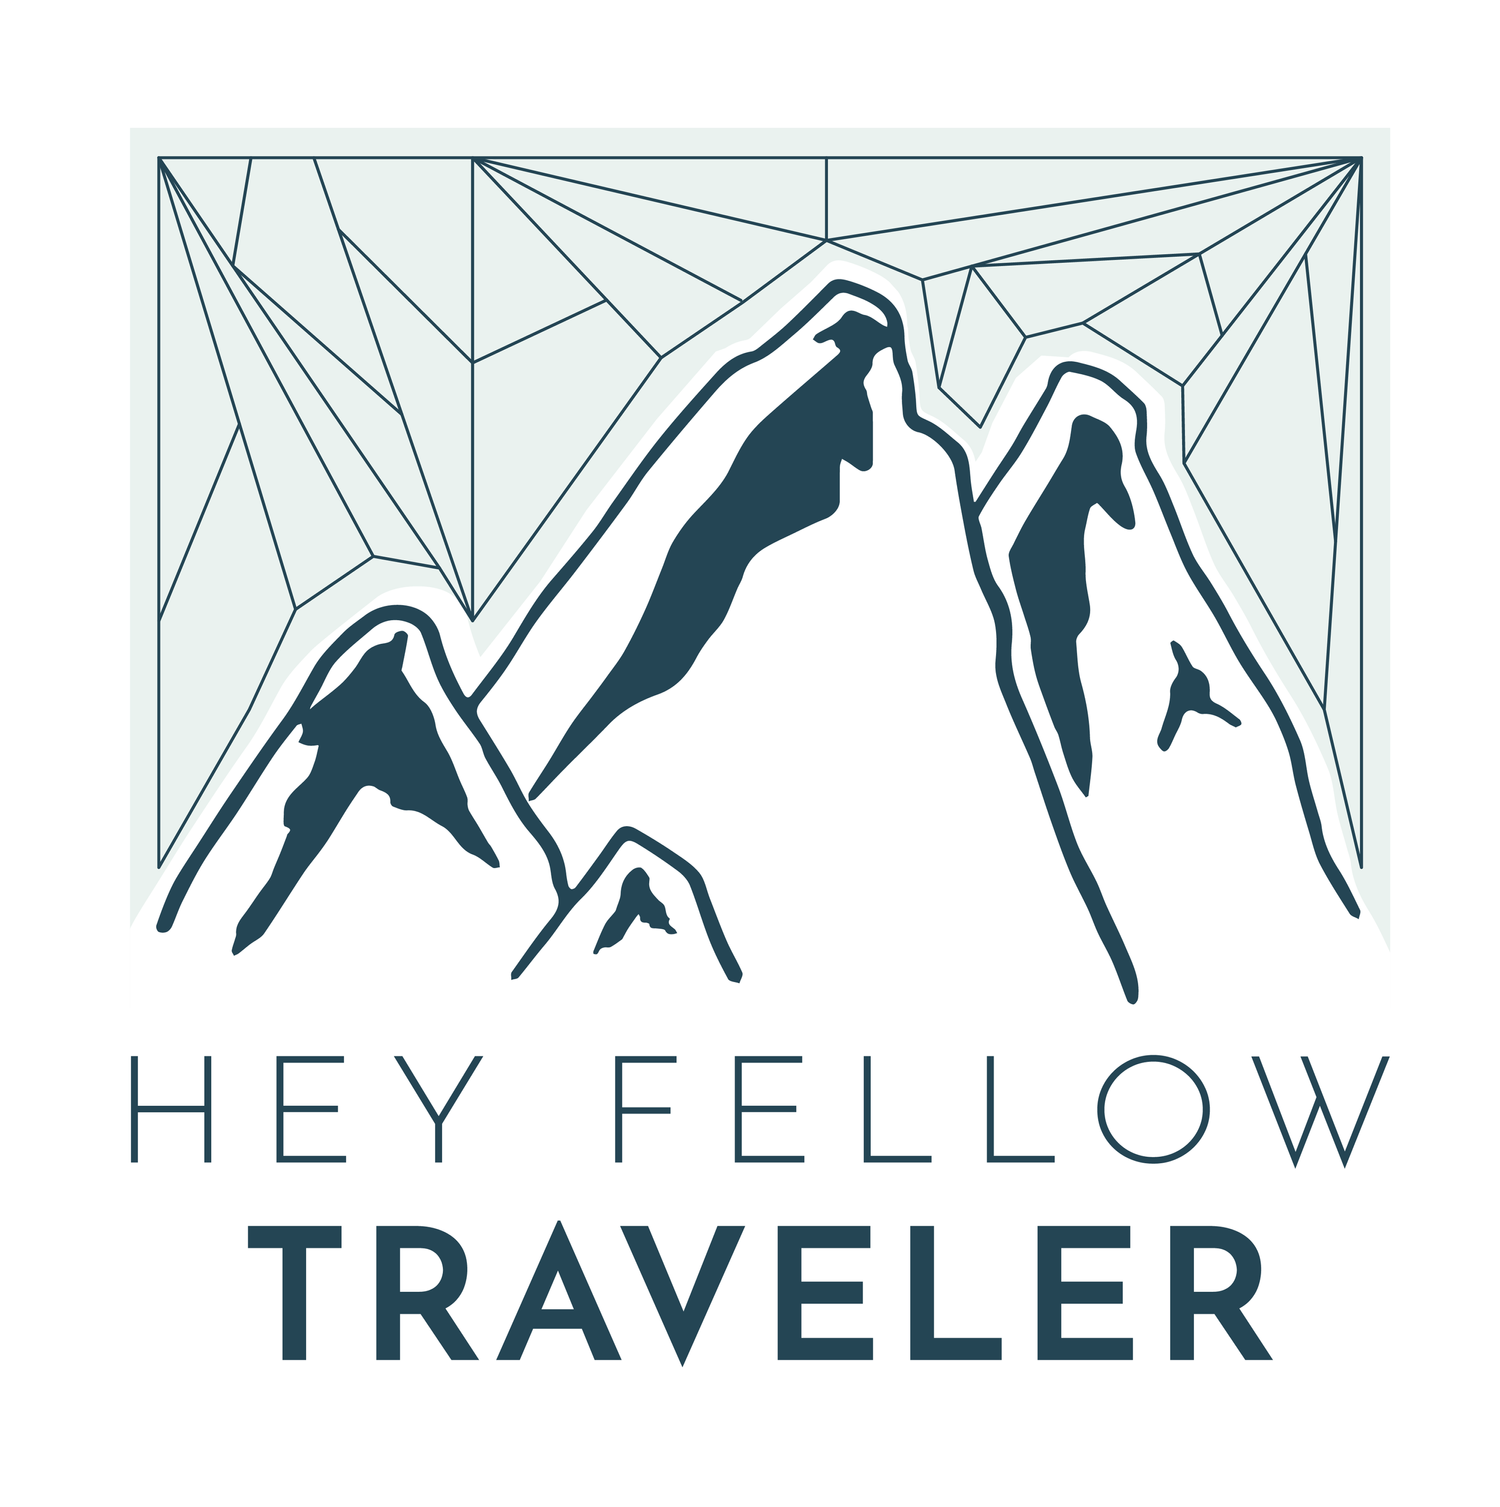 Hey Fellow Traveler